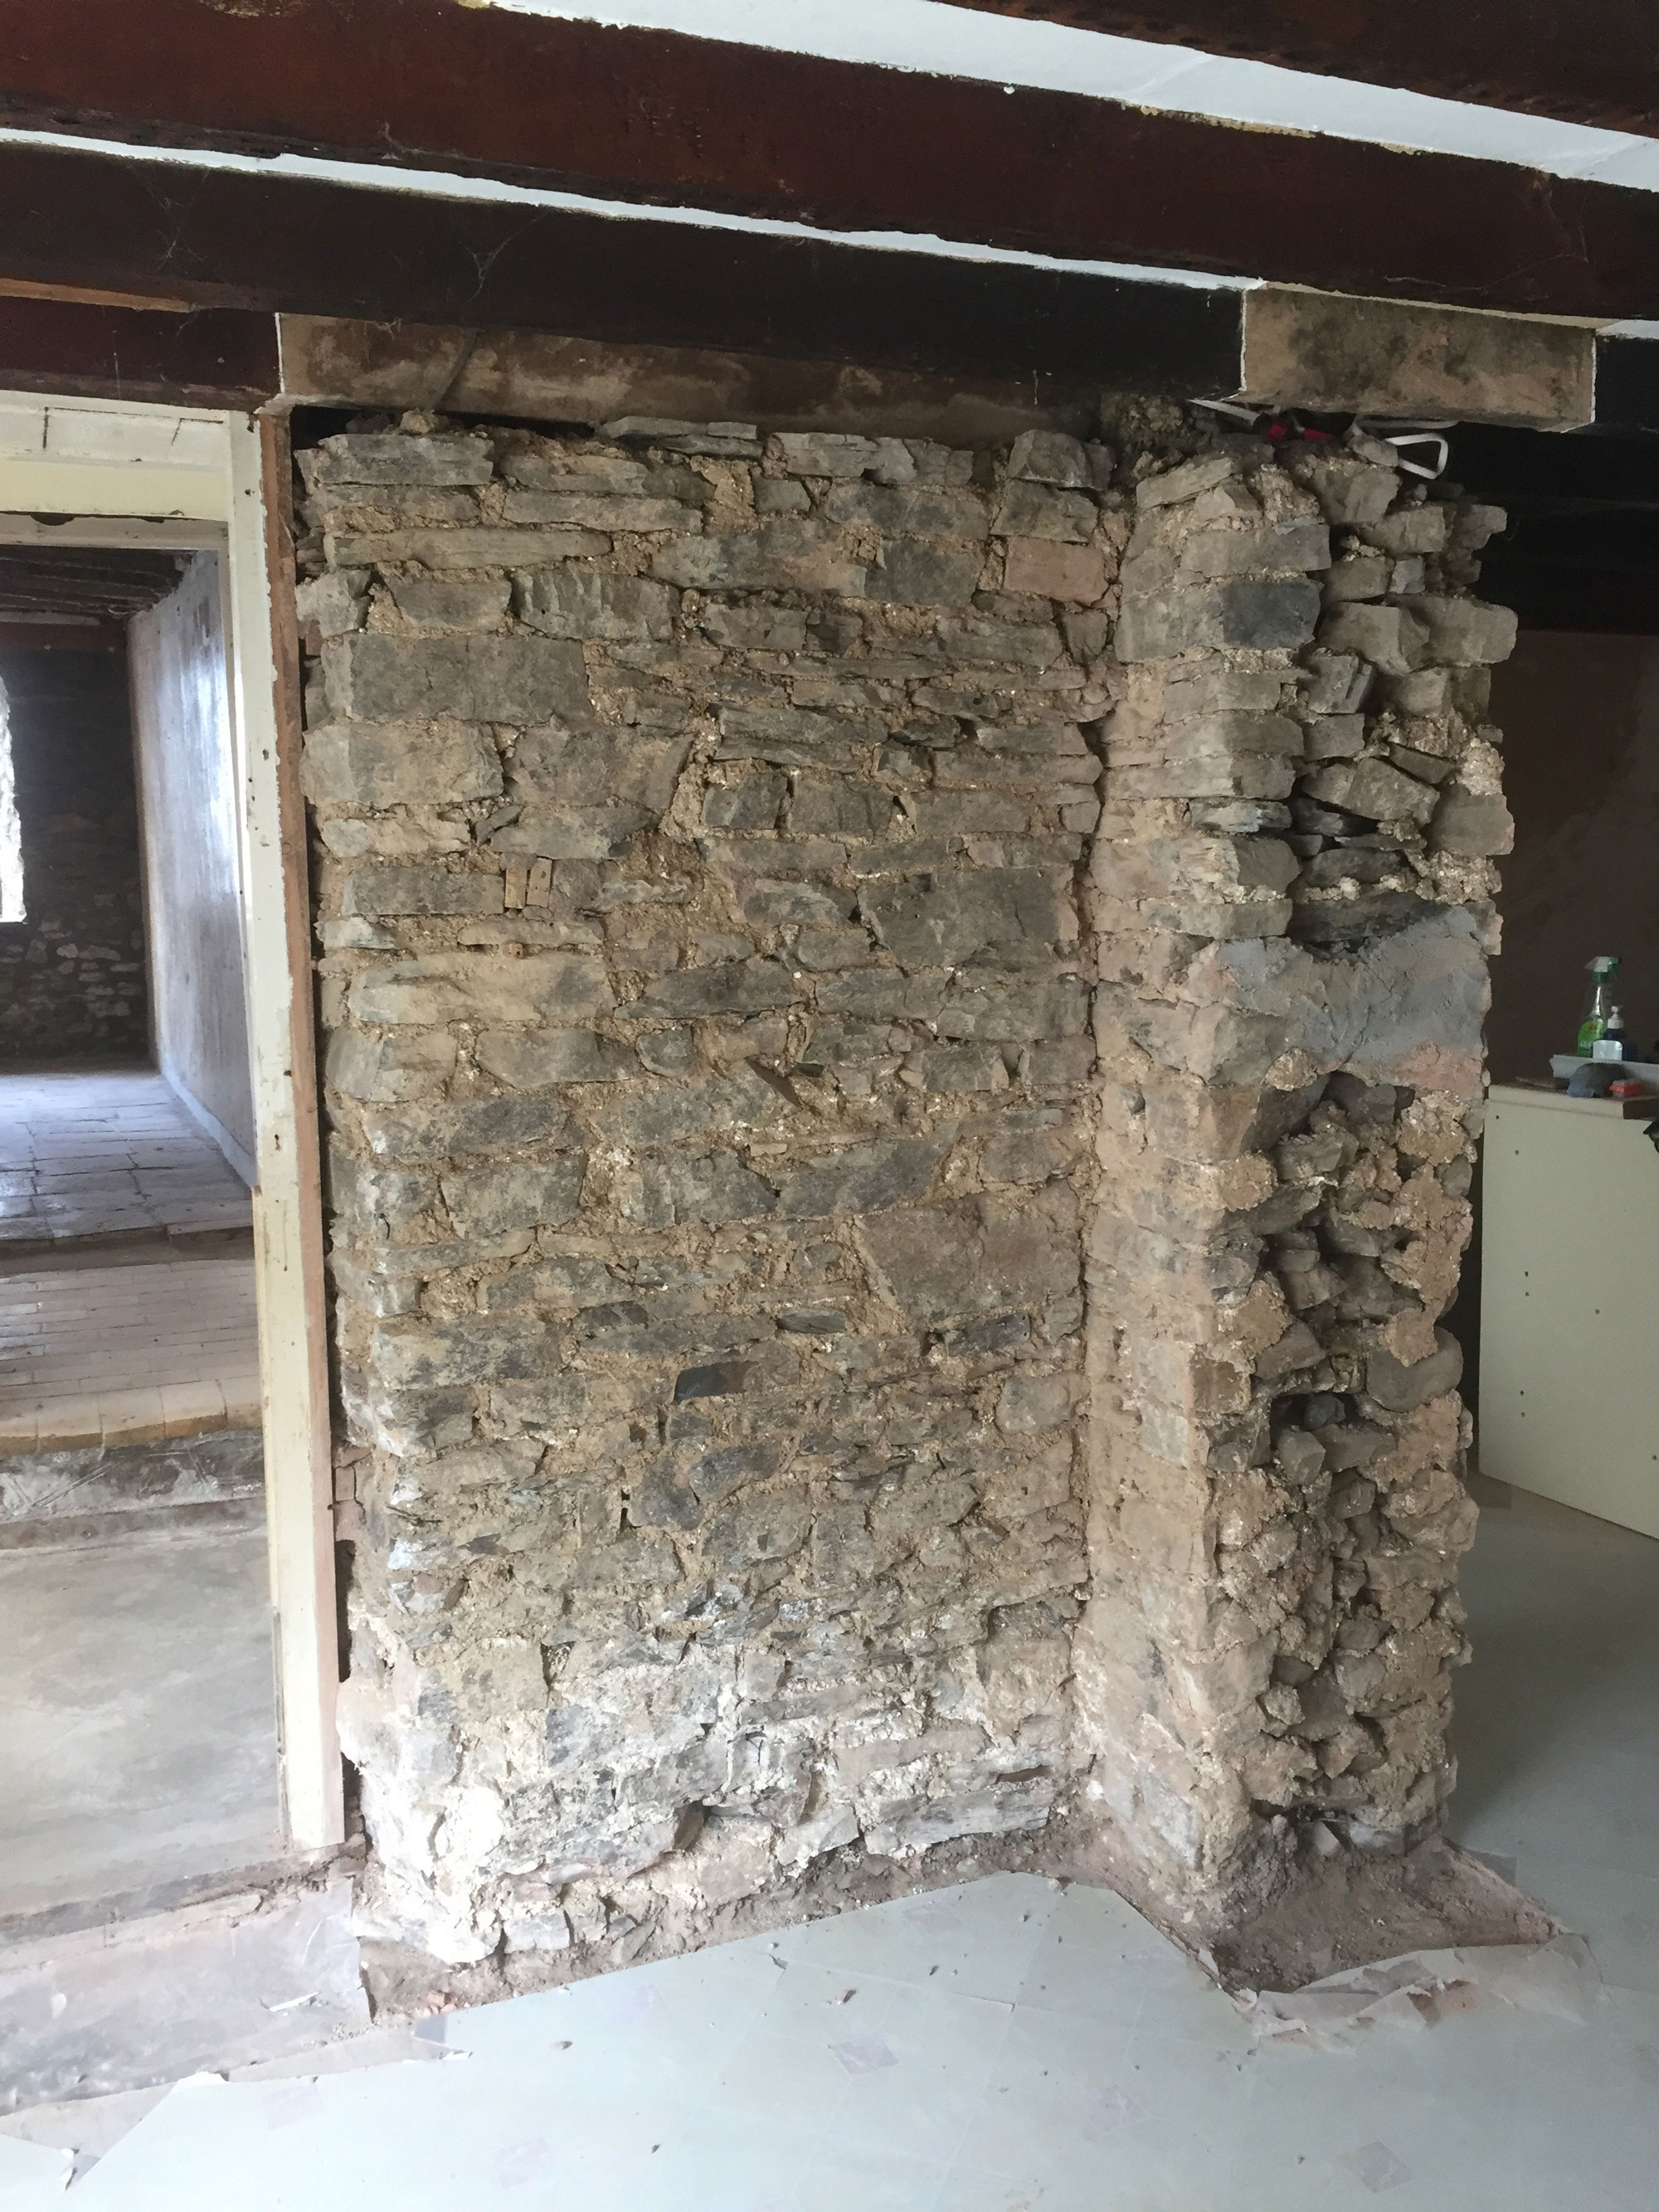 Period renovation exposed brick